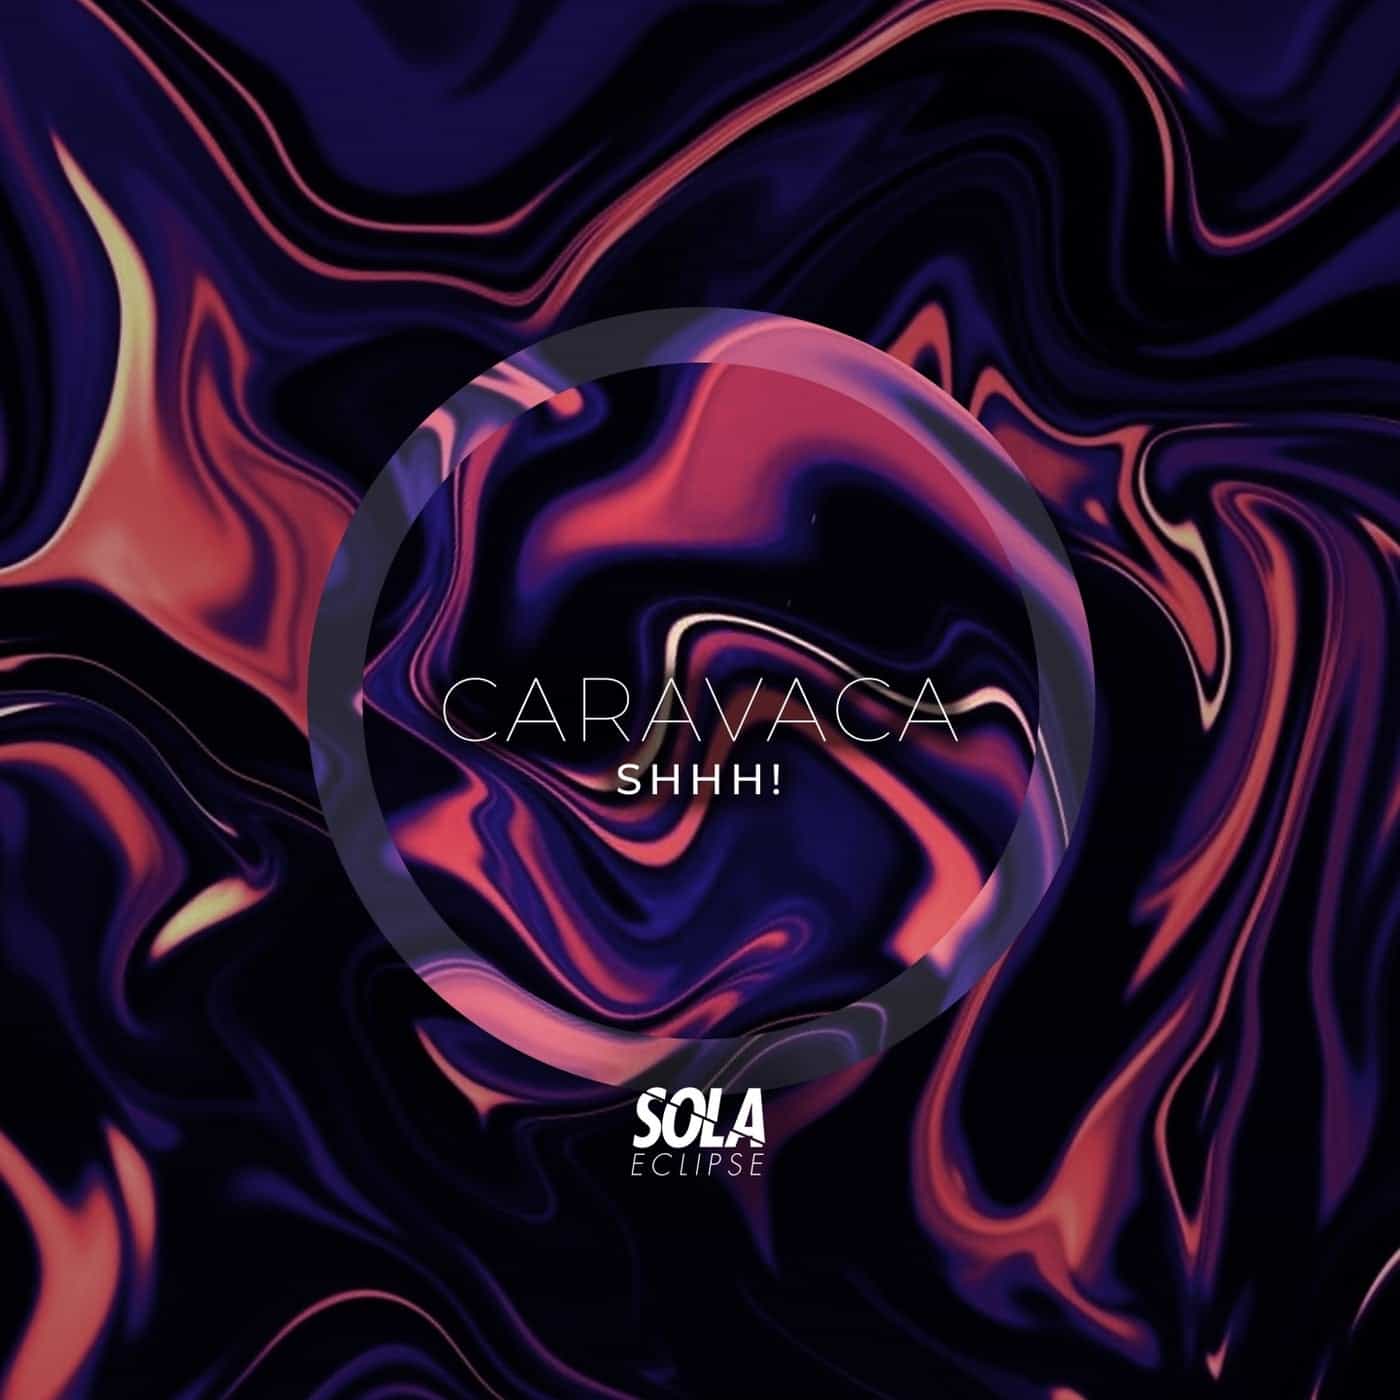 Download Caravaca - Shhh! on Electrobuzz